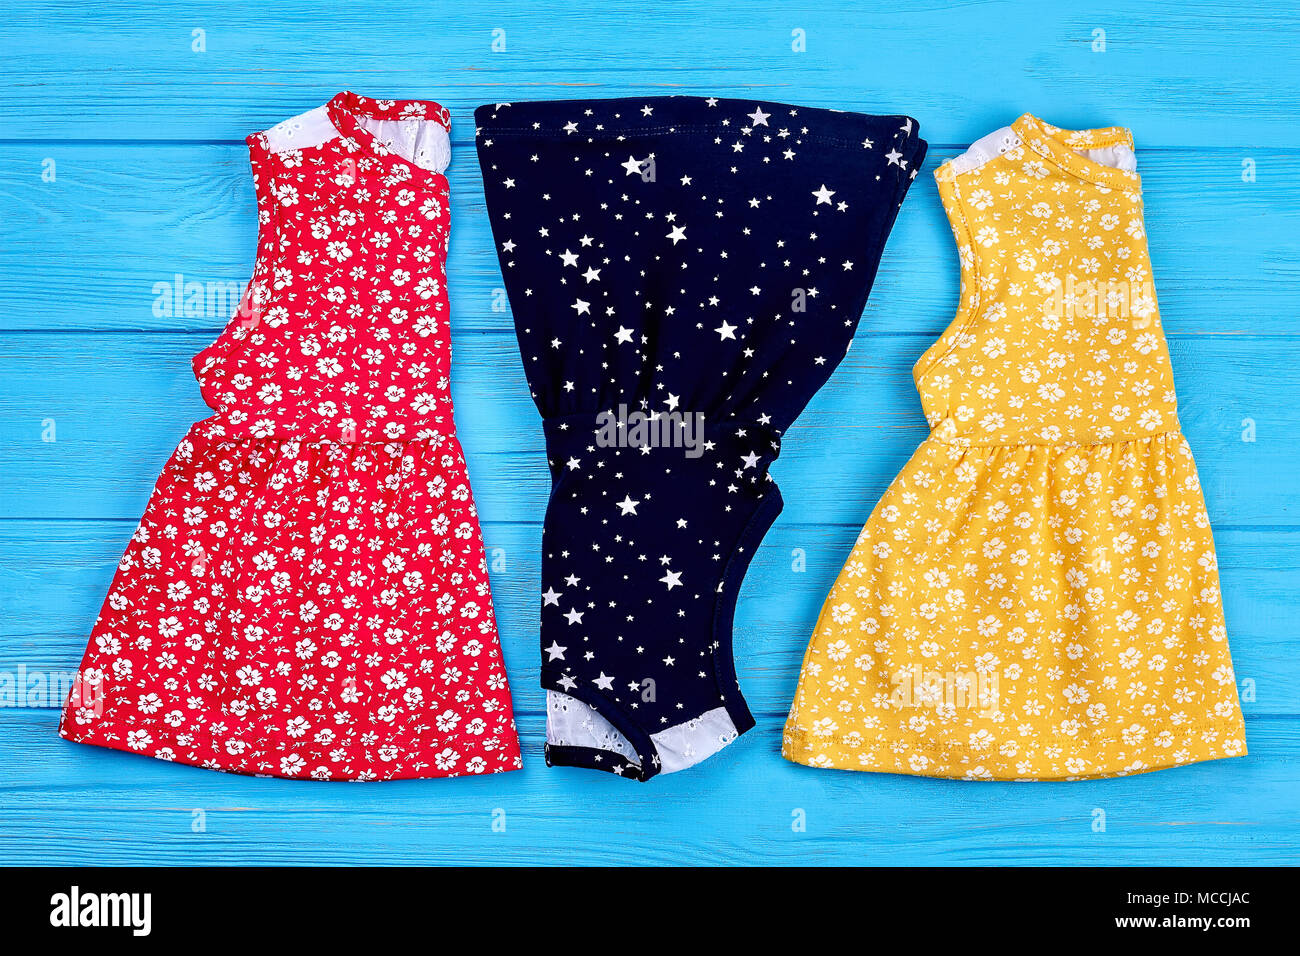 Baby Summer Dresses Sale Discount Sale ...